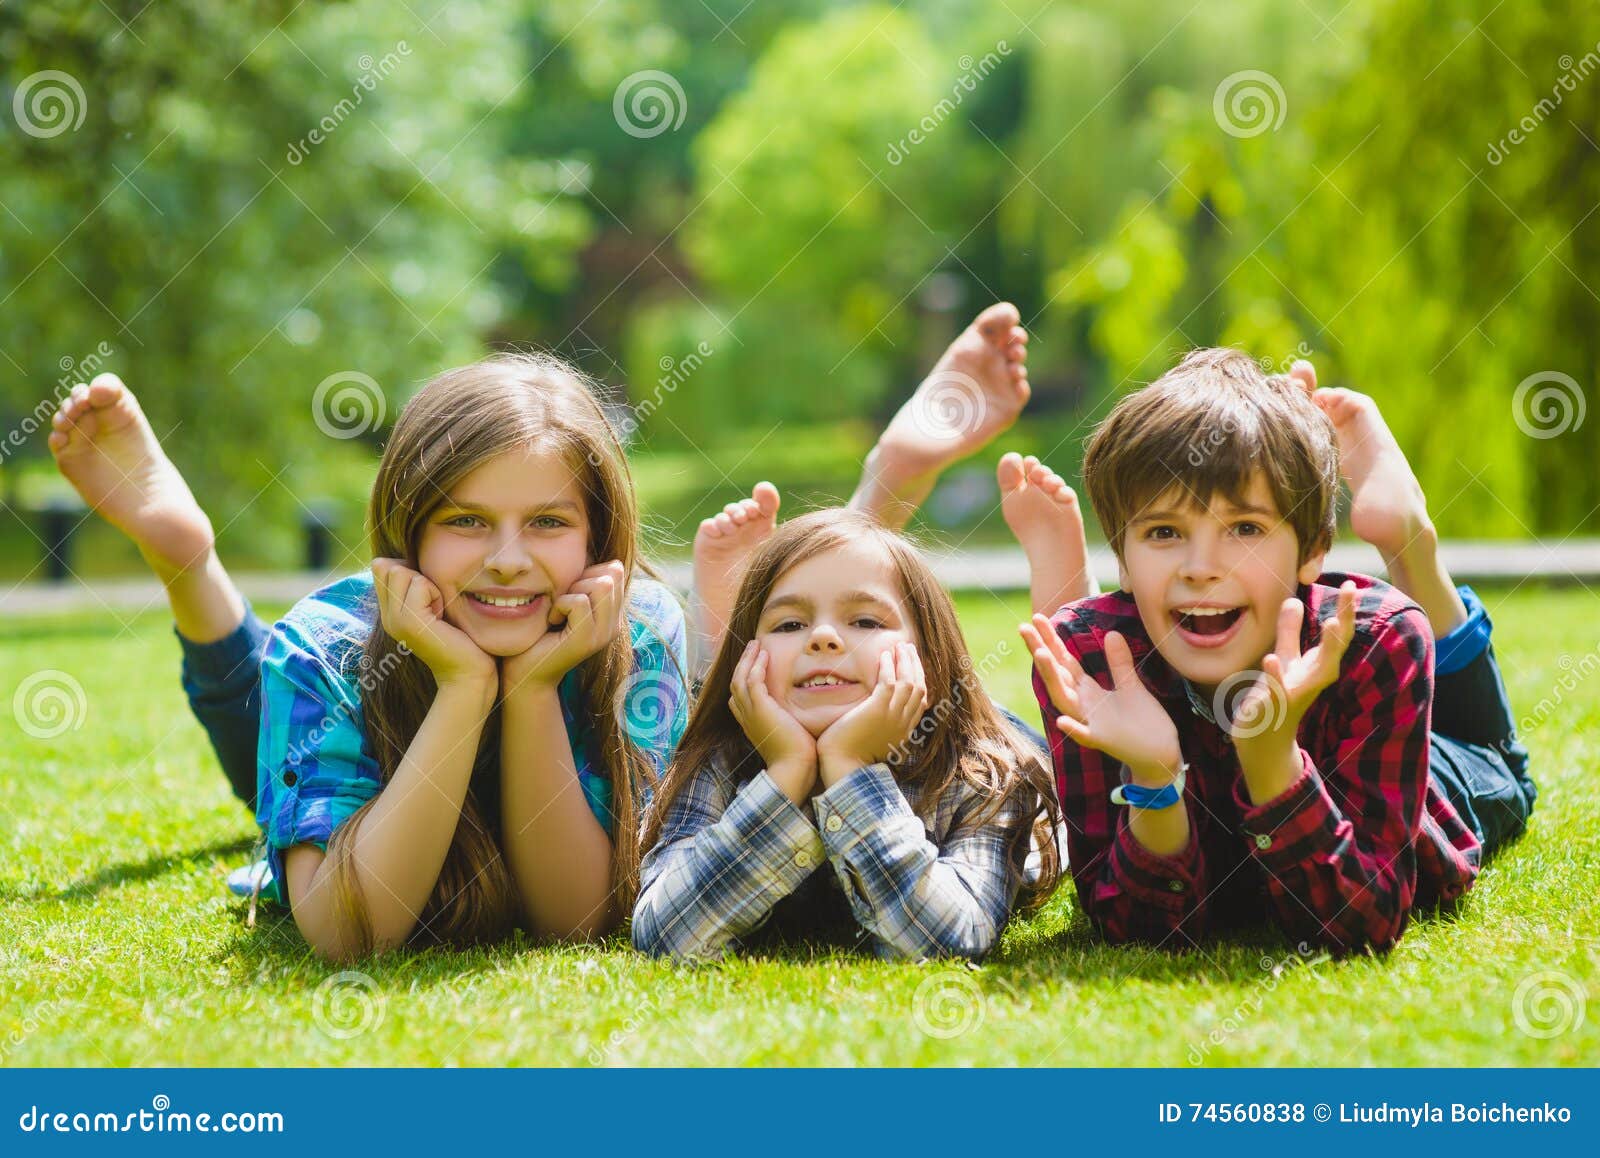 Smiling Kids Having Fun at Grass. Children Playing Outdoors in Summer